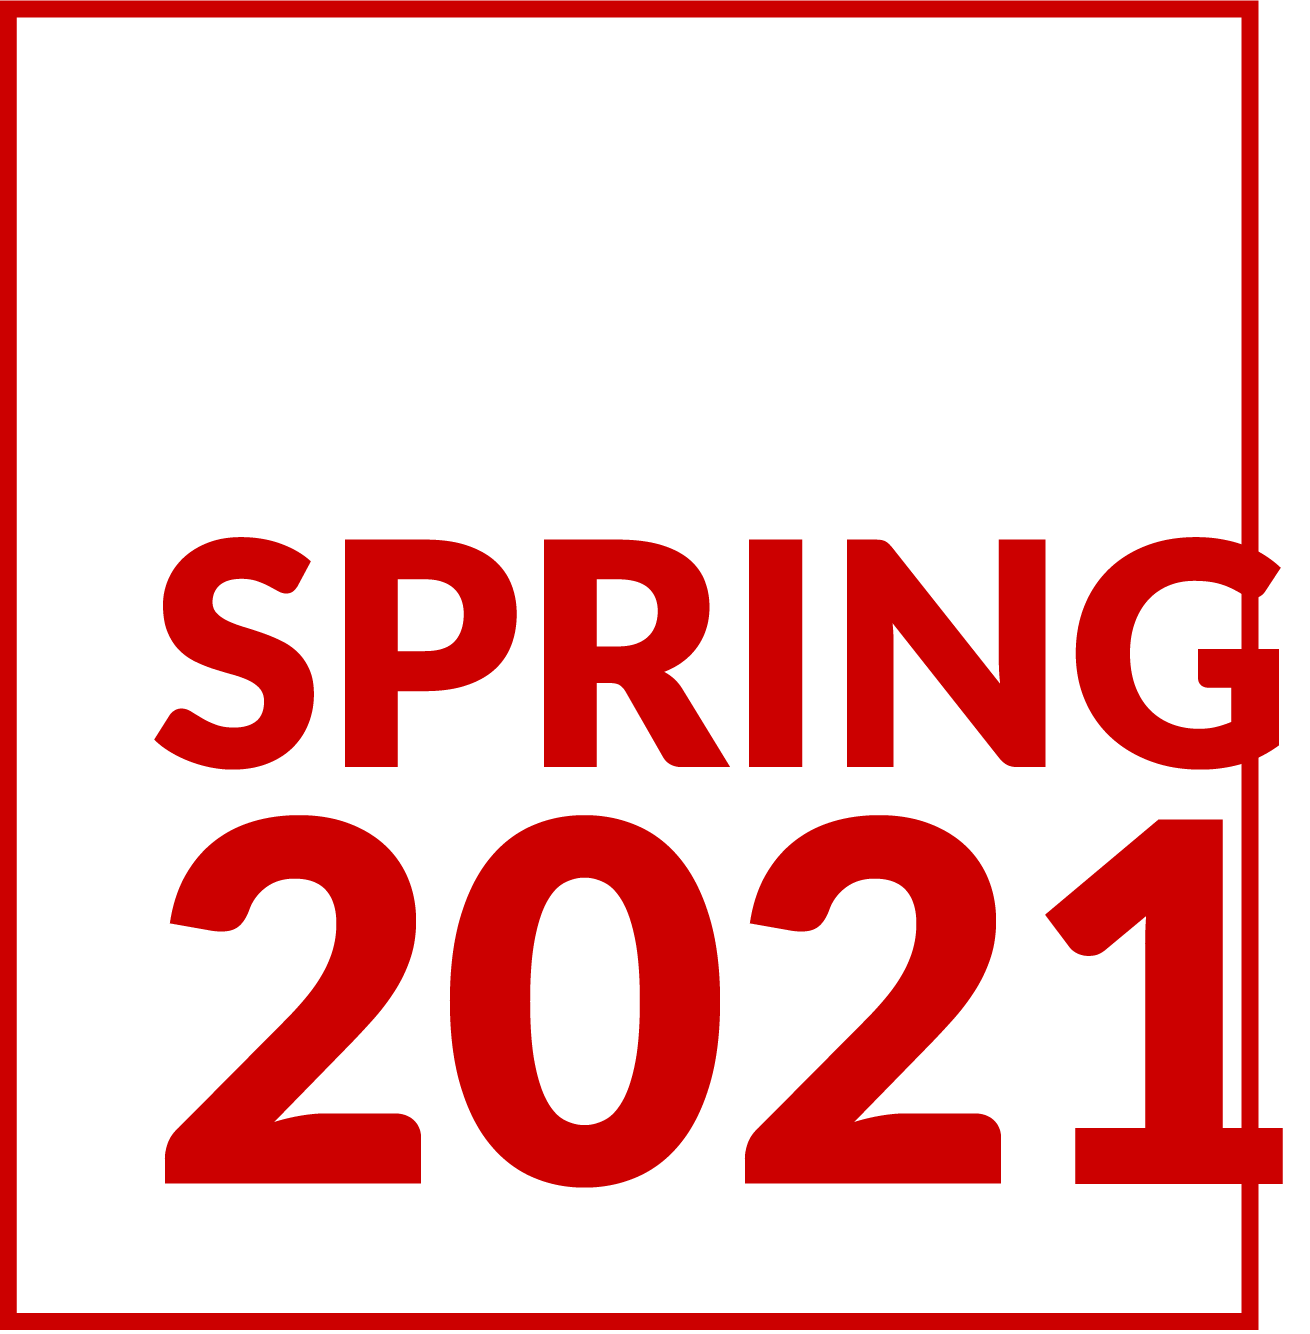 Spring 2021 heading